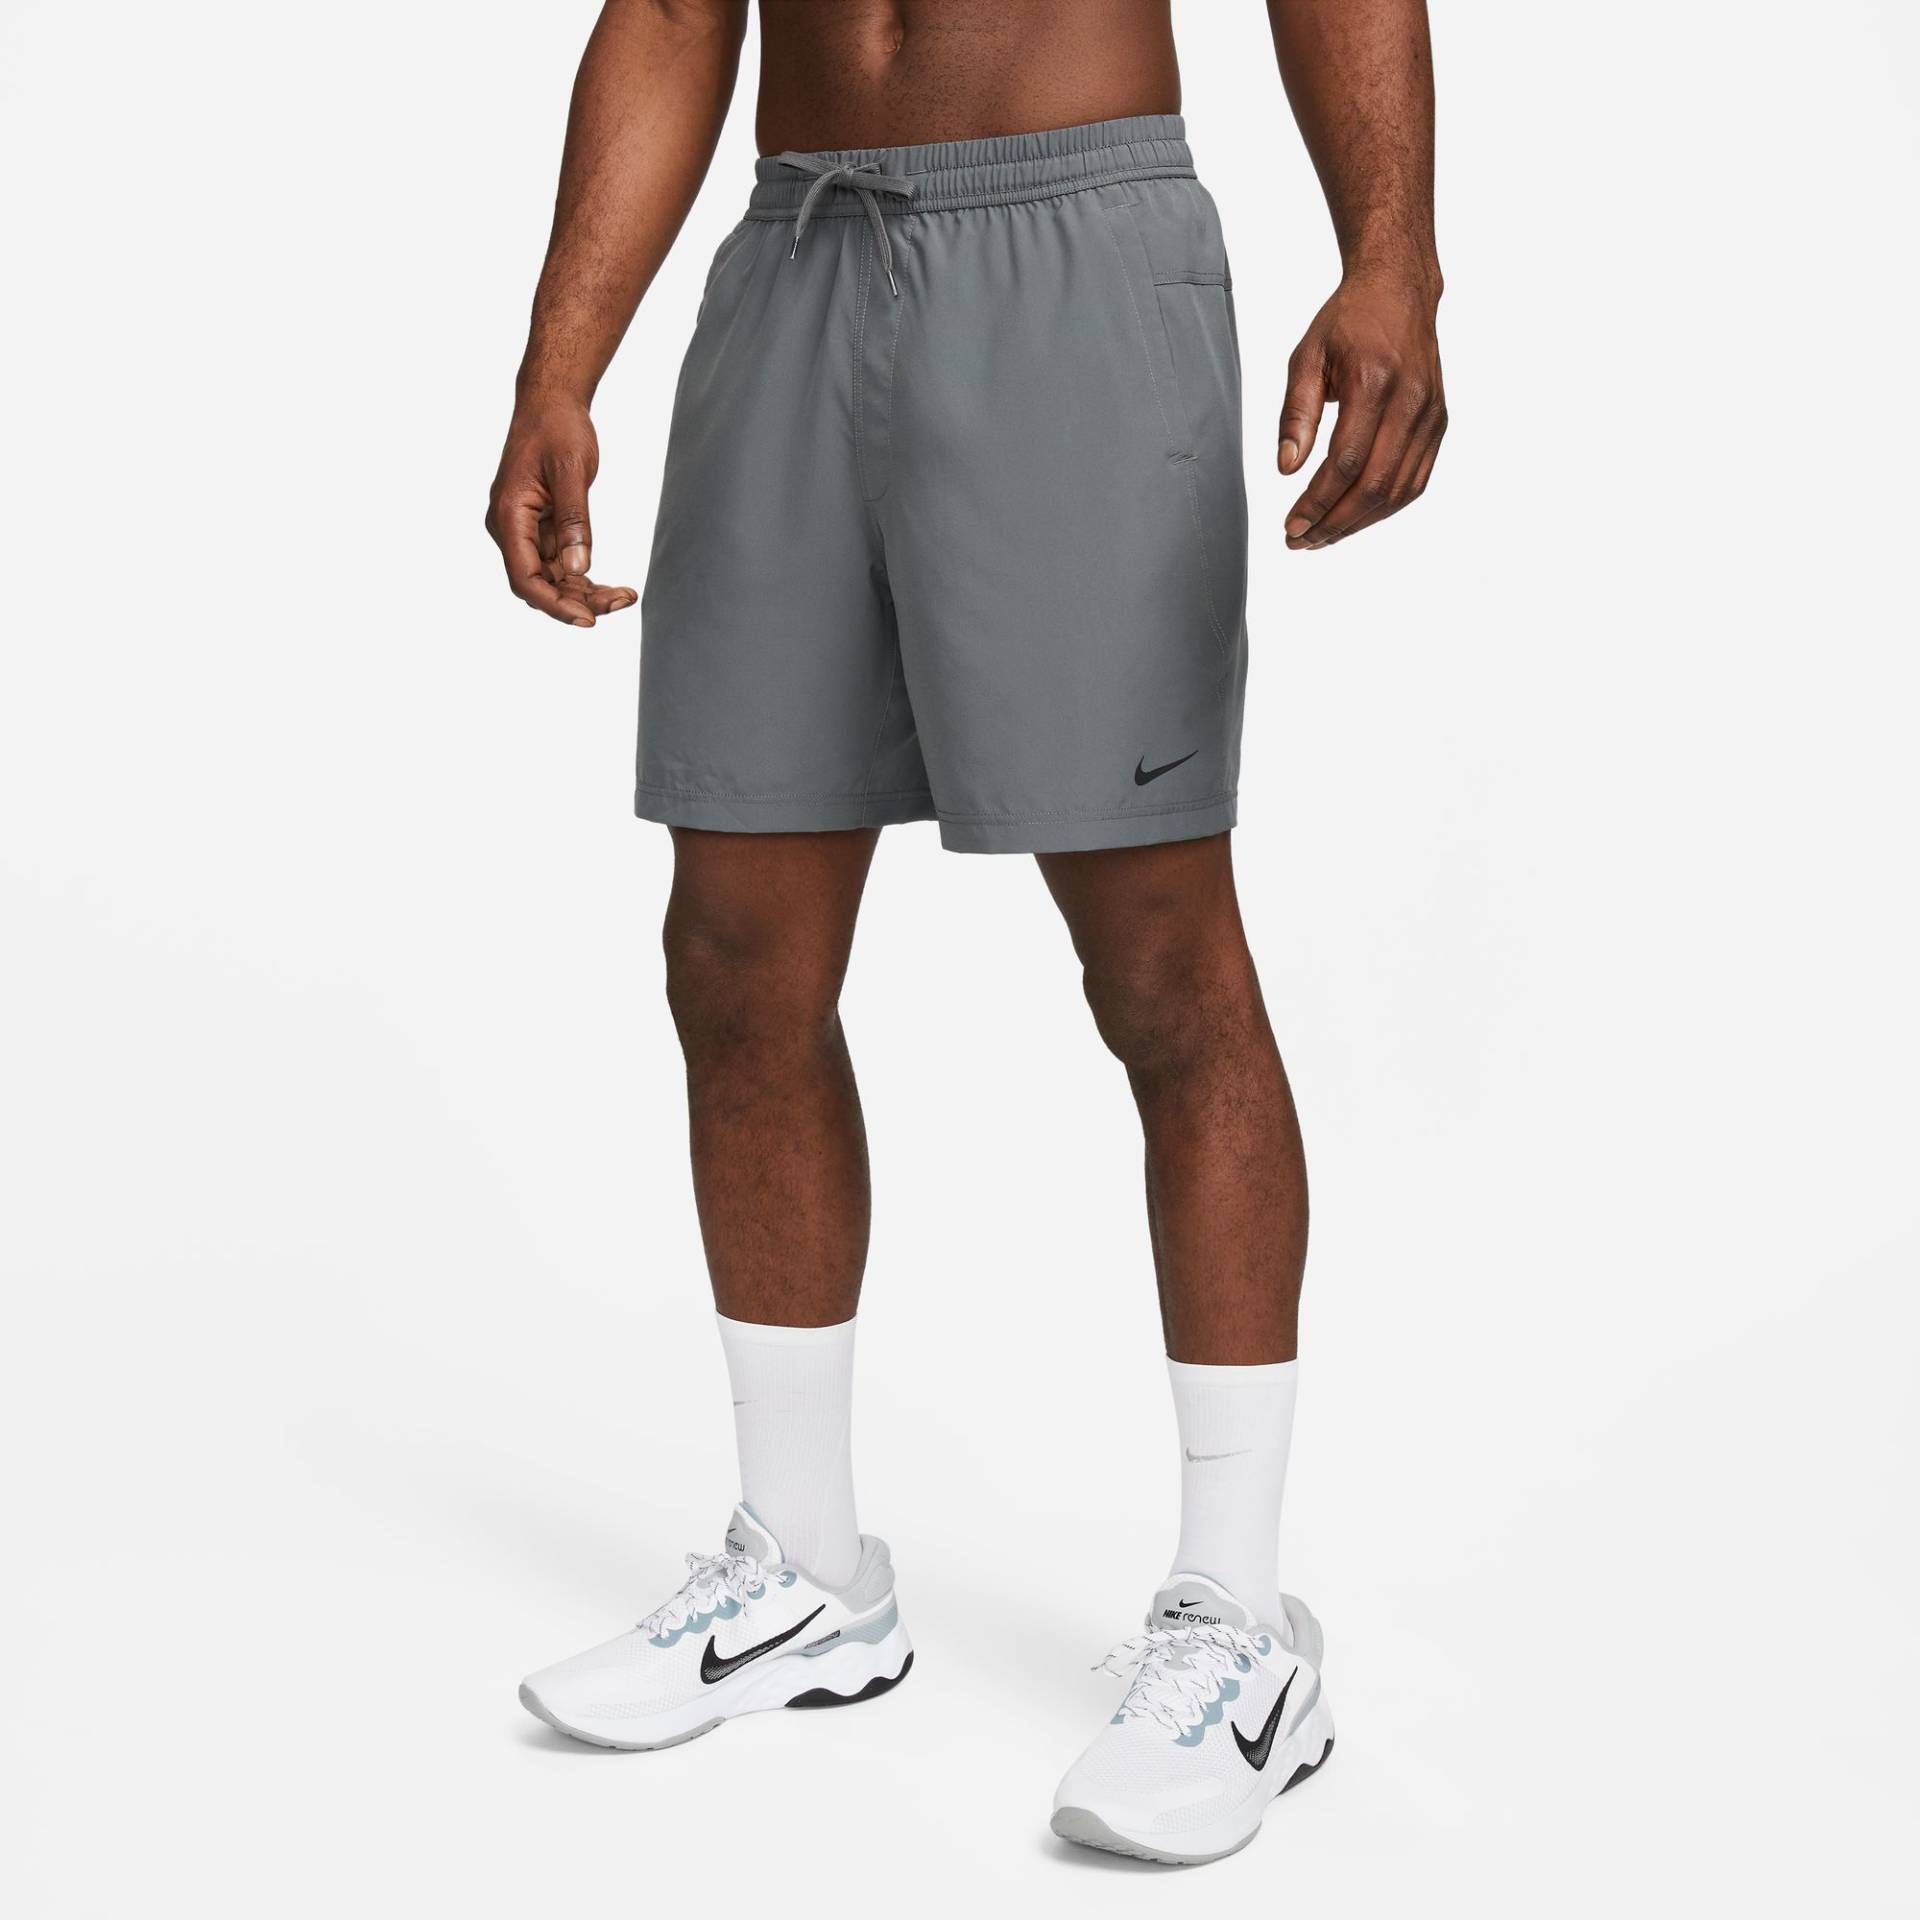 Nike Trainingsshorts »DRI-FIT FORM MEN'S UNLINED VERSATILE SHORTS« von Nike